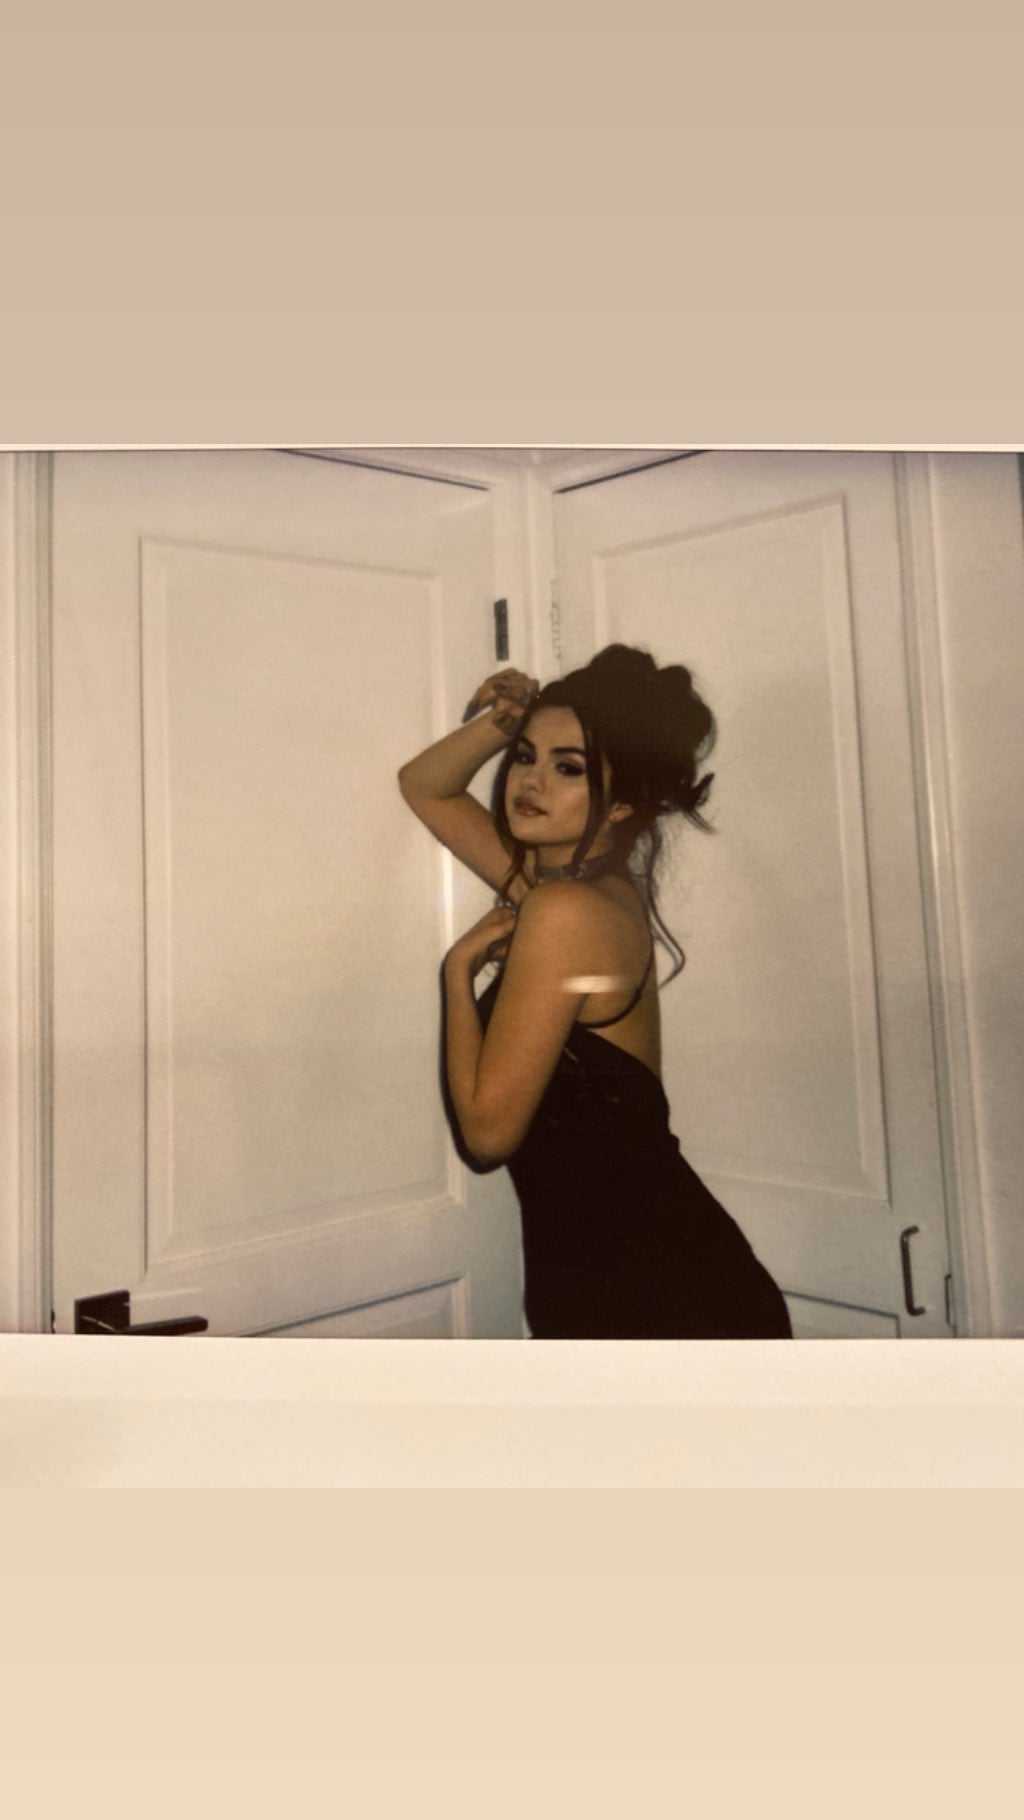 Selena Gomez Julia Michaels' 90S Prom-Themed Birthday Party November 10,  2019 – Star Style